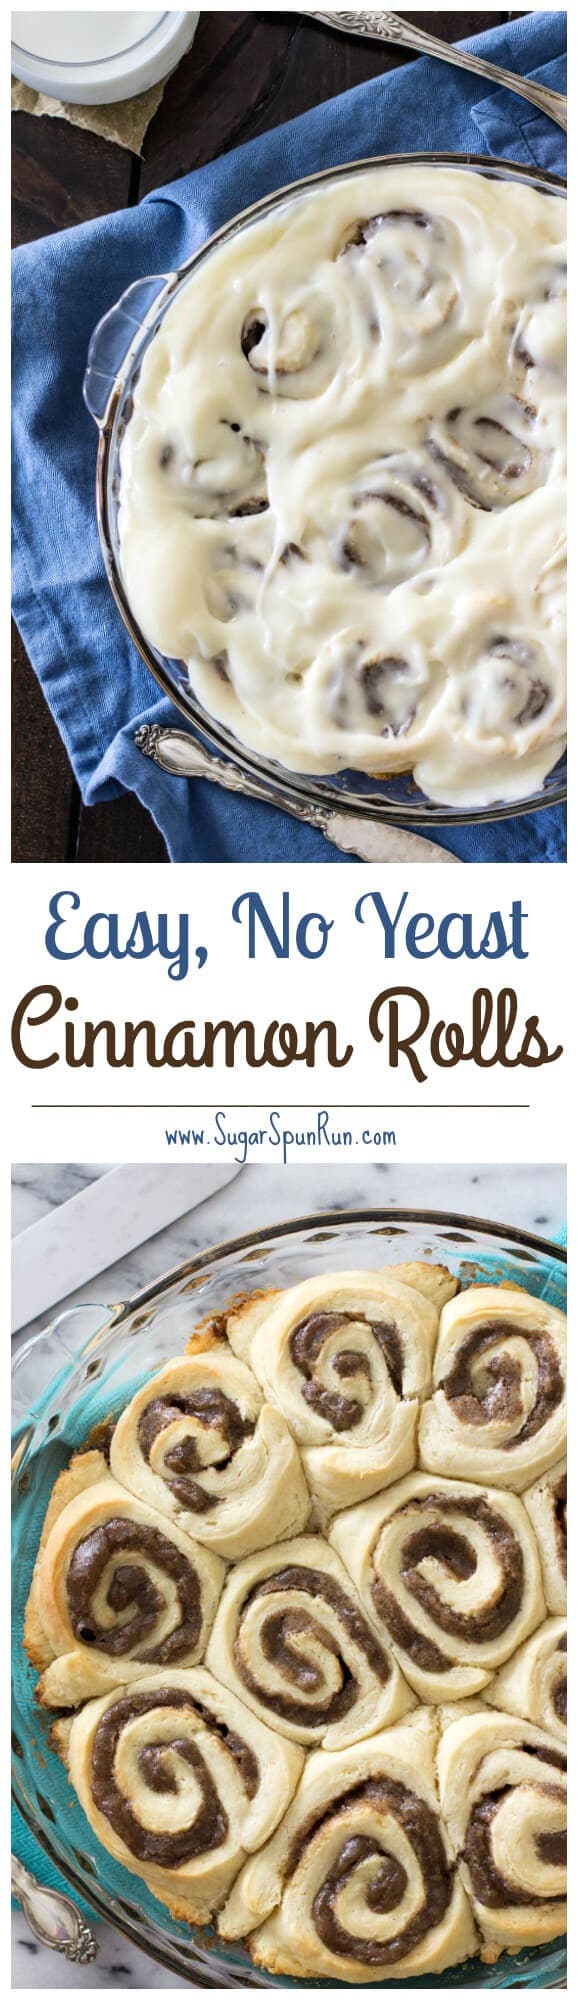 Easy no yeast cinnamon rolls